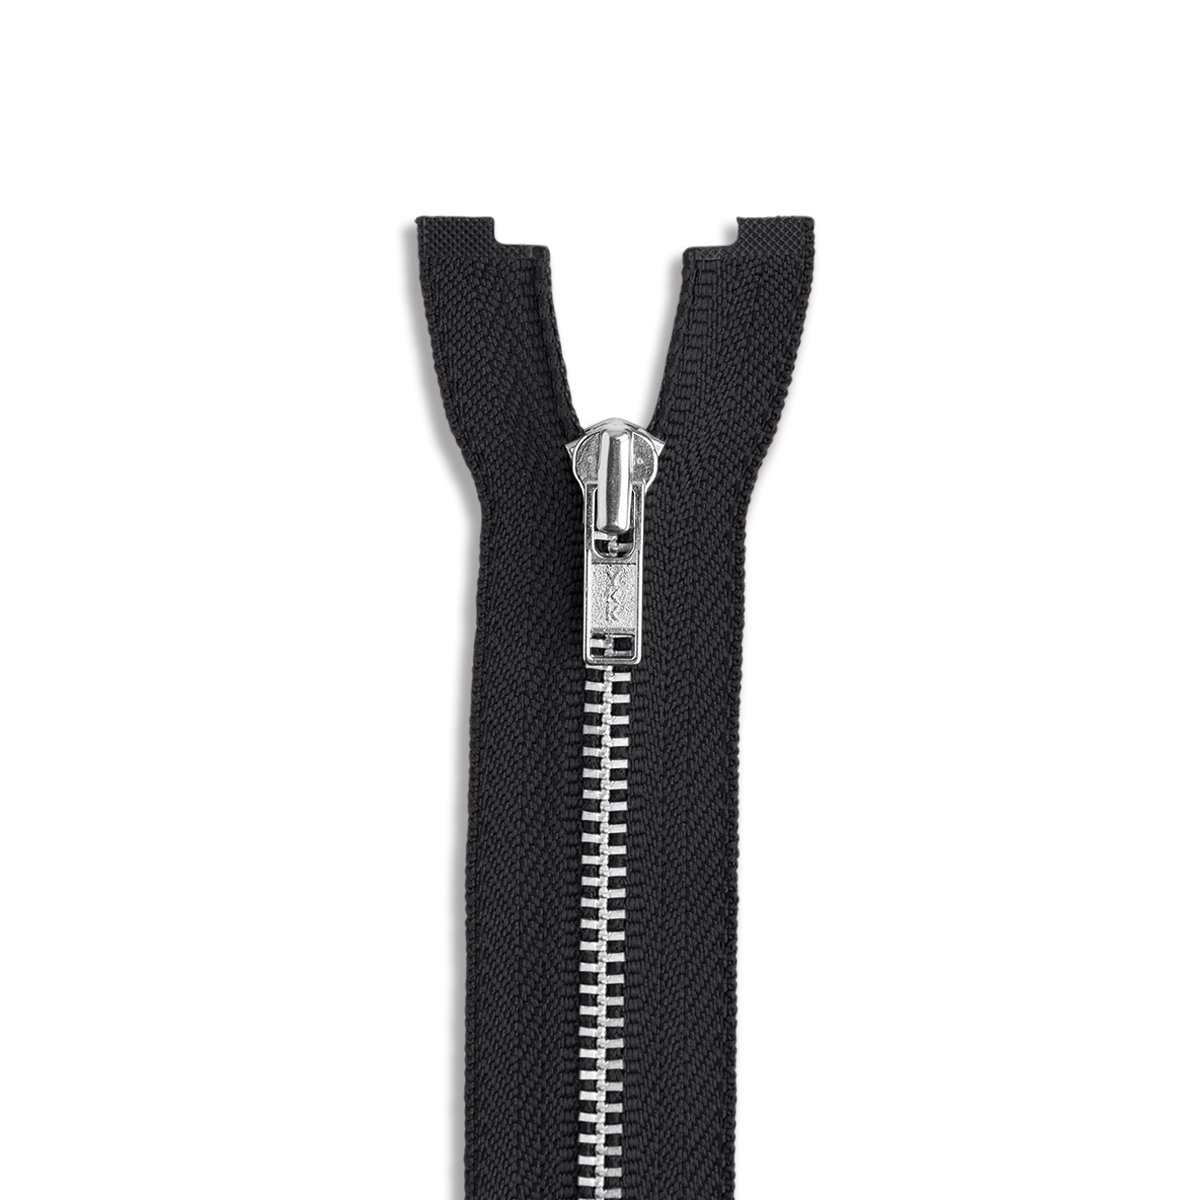 Coat Lining Zippers | Lining Zippers | Separating Coat Lining Zippers